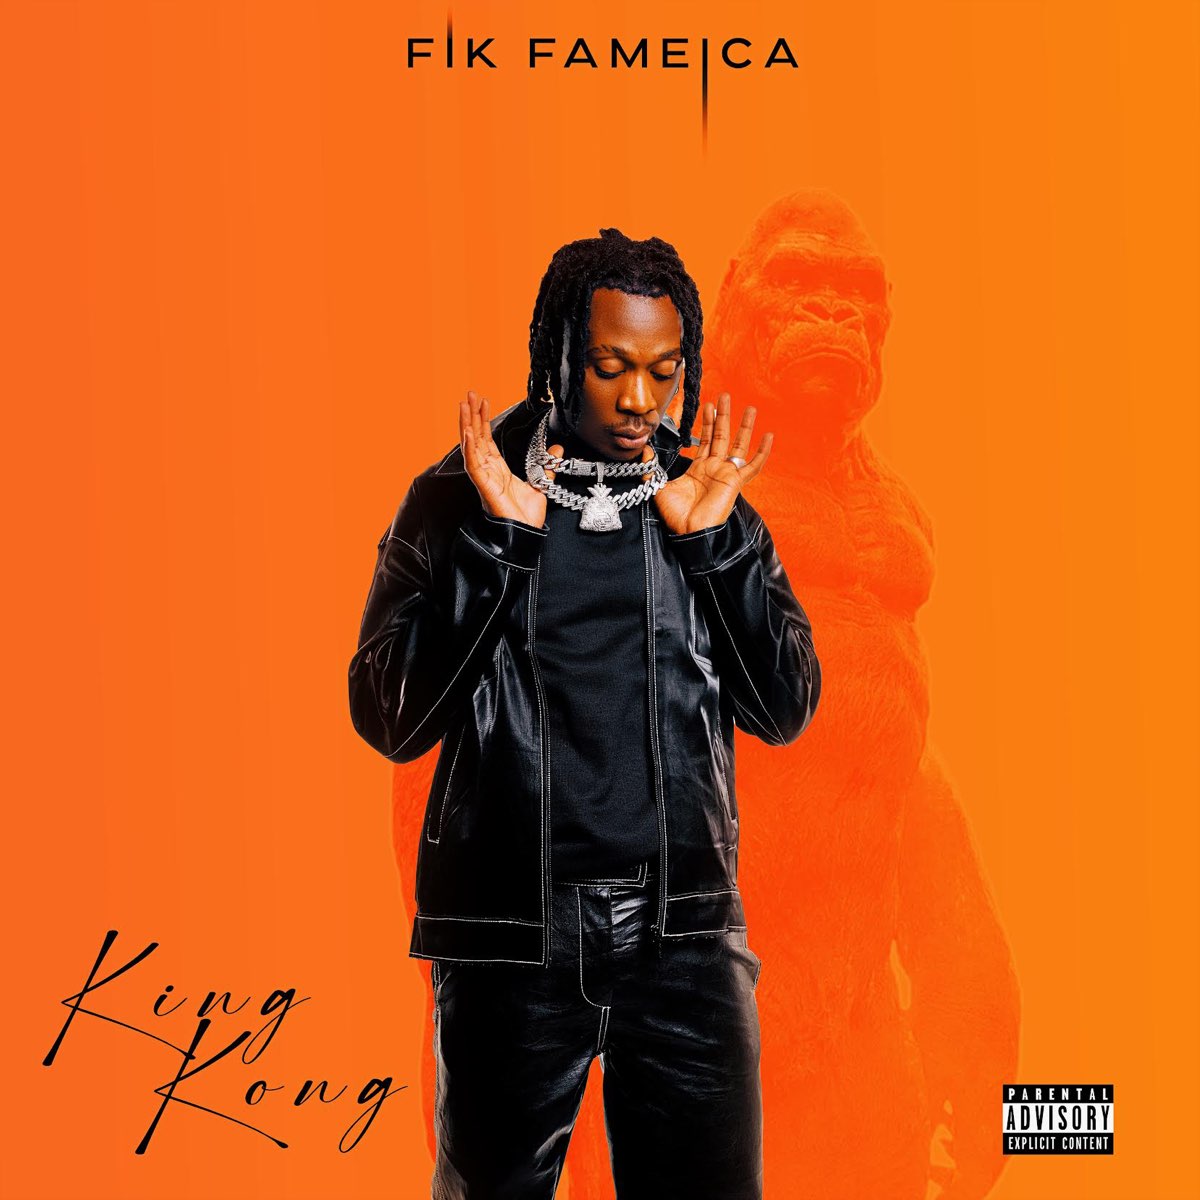 King Kong - Album by Fik Fameica - Apple Music